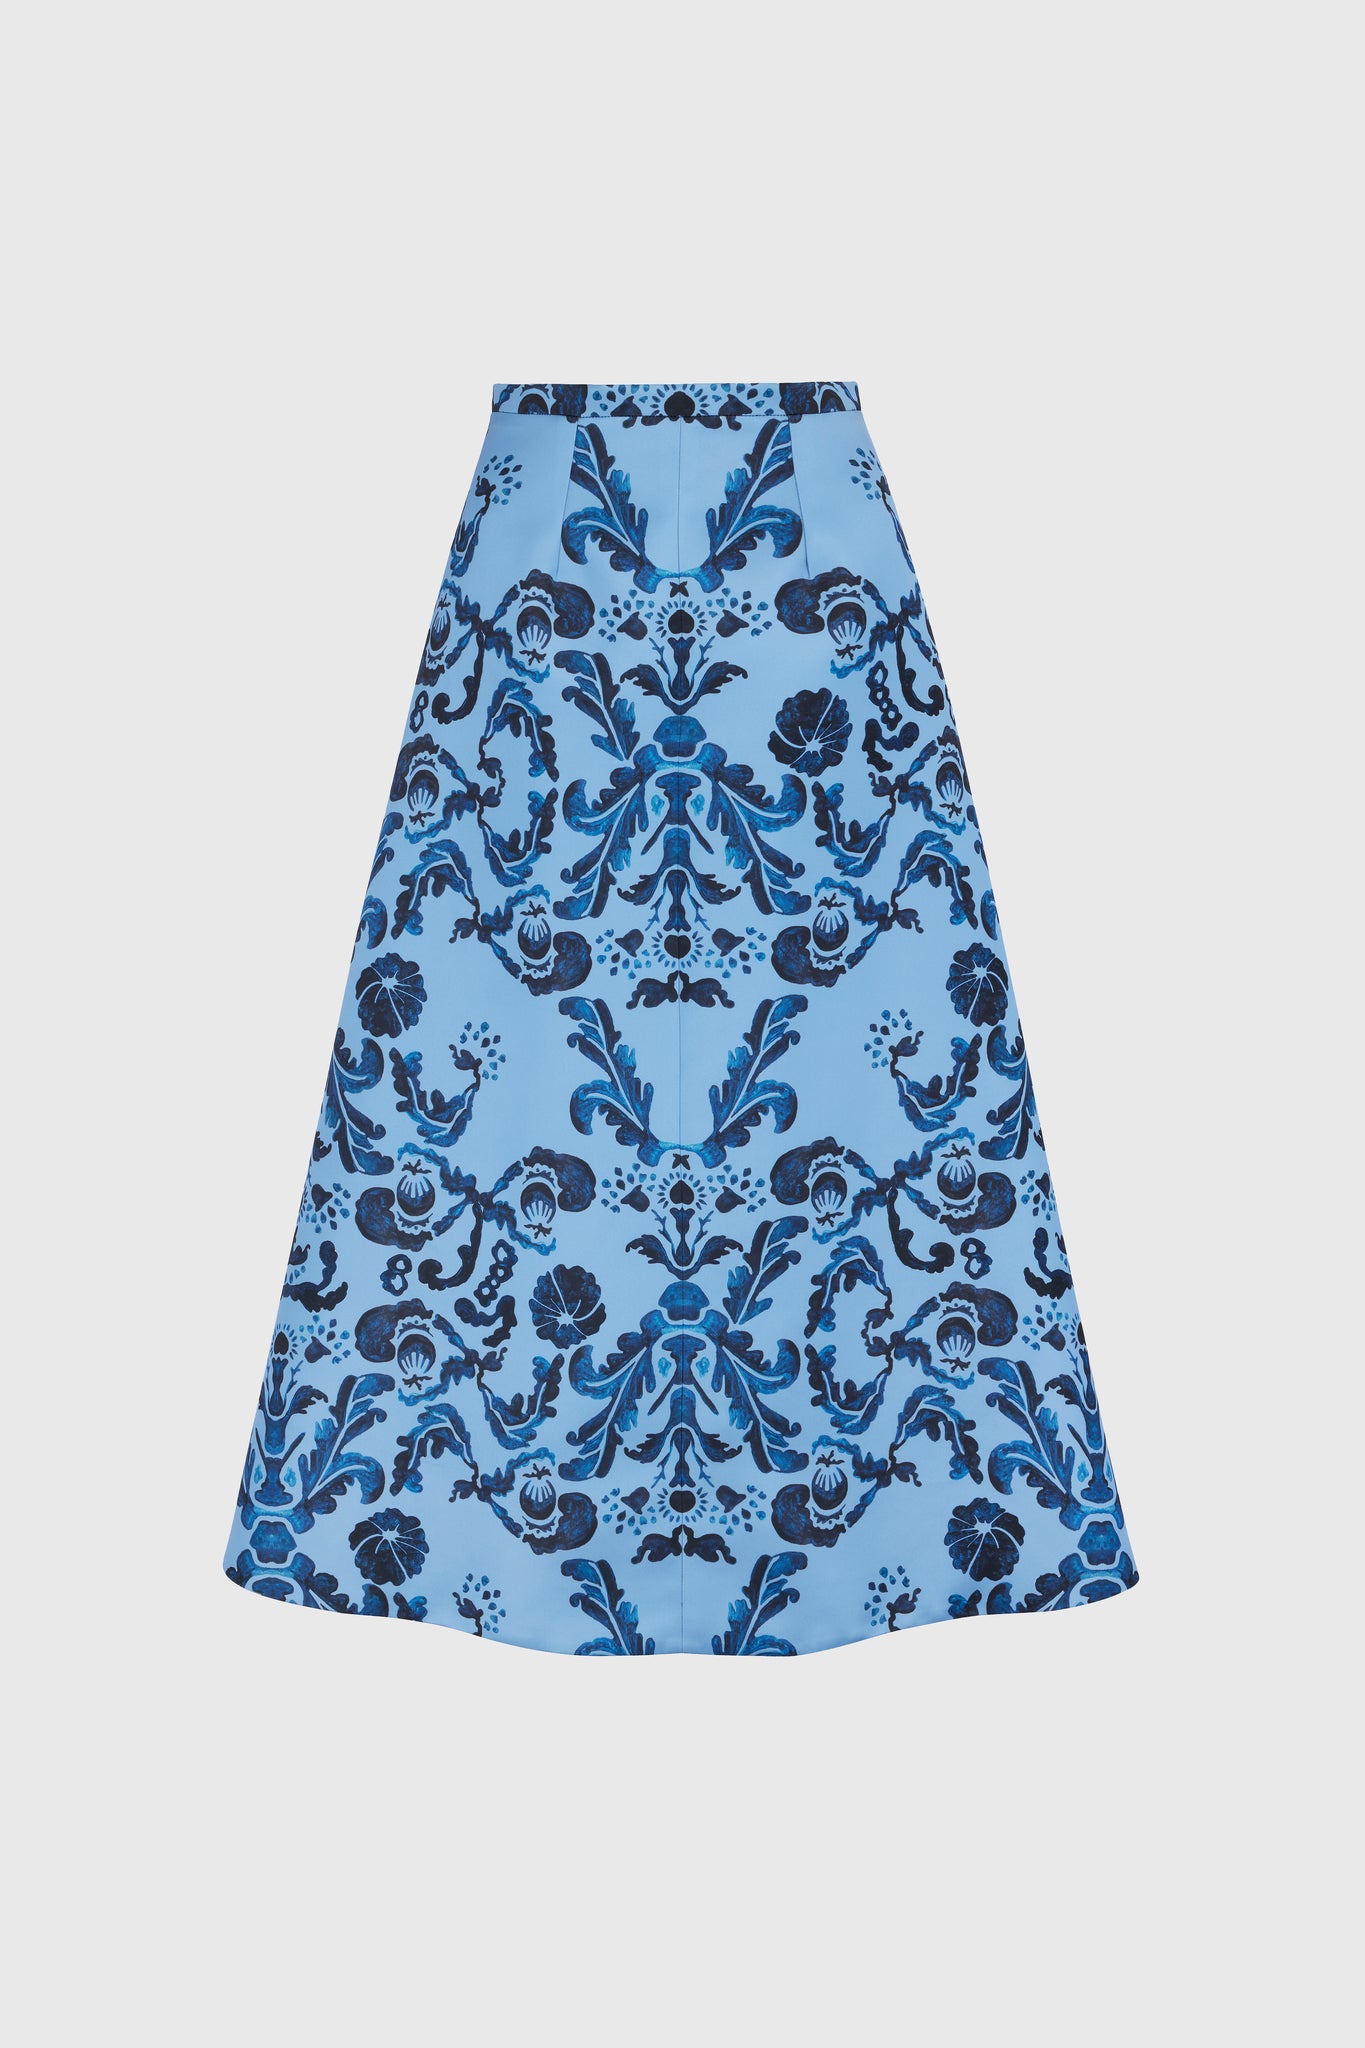 Hallie Skirt | Milanese Decorative Print Skirt in Blue Tafetta Faille | Emilia Wickstead